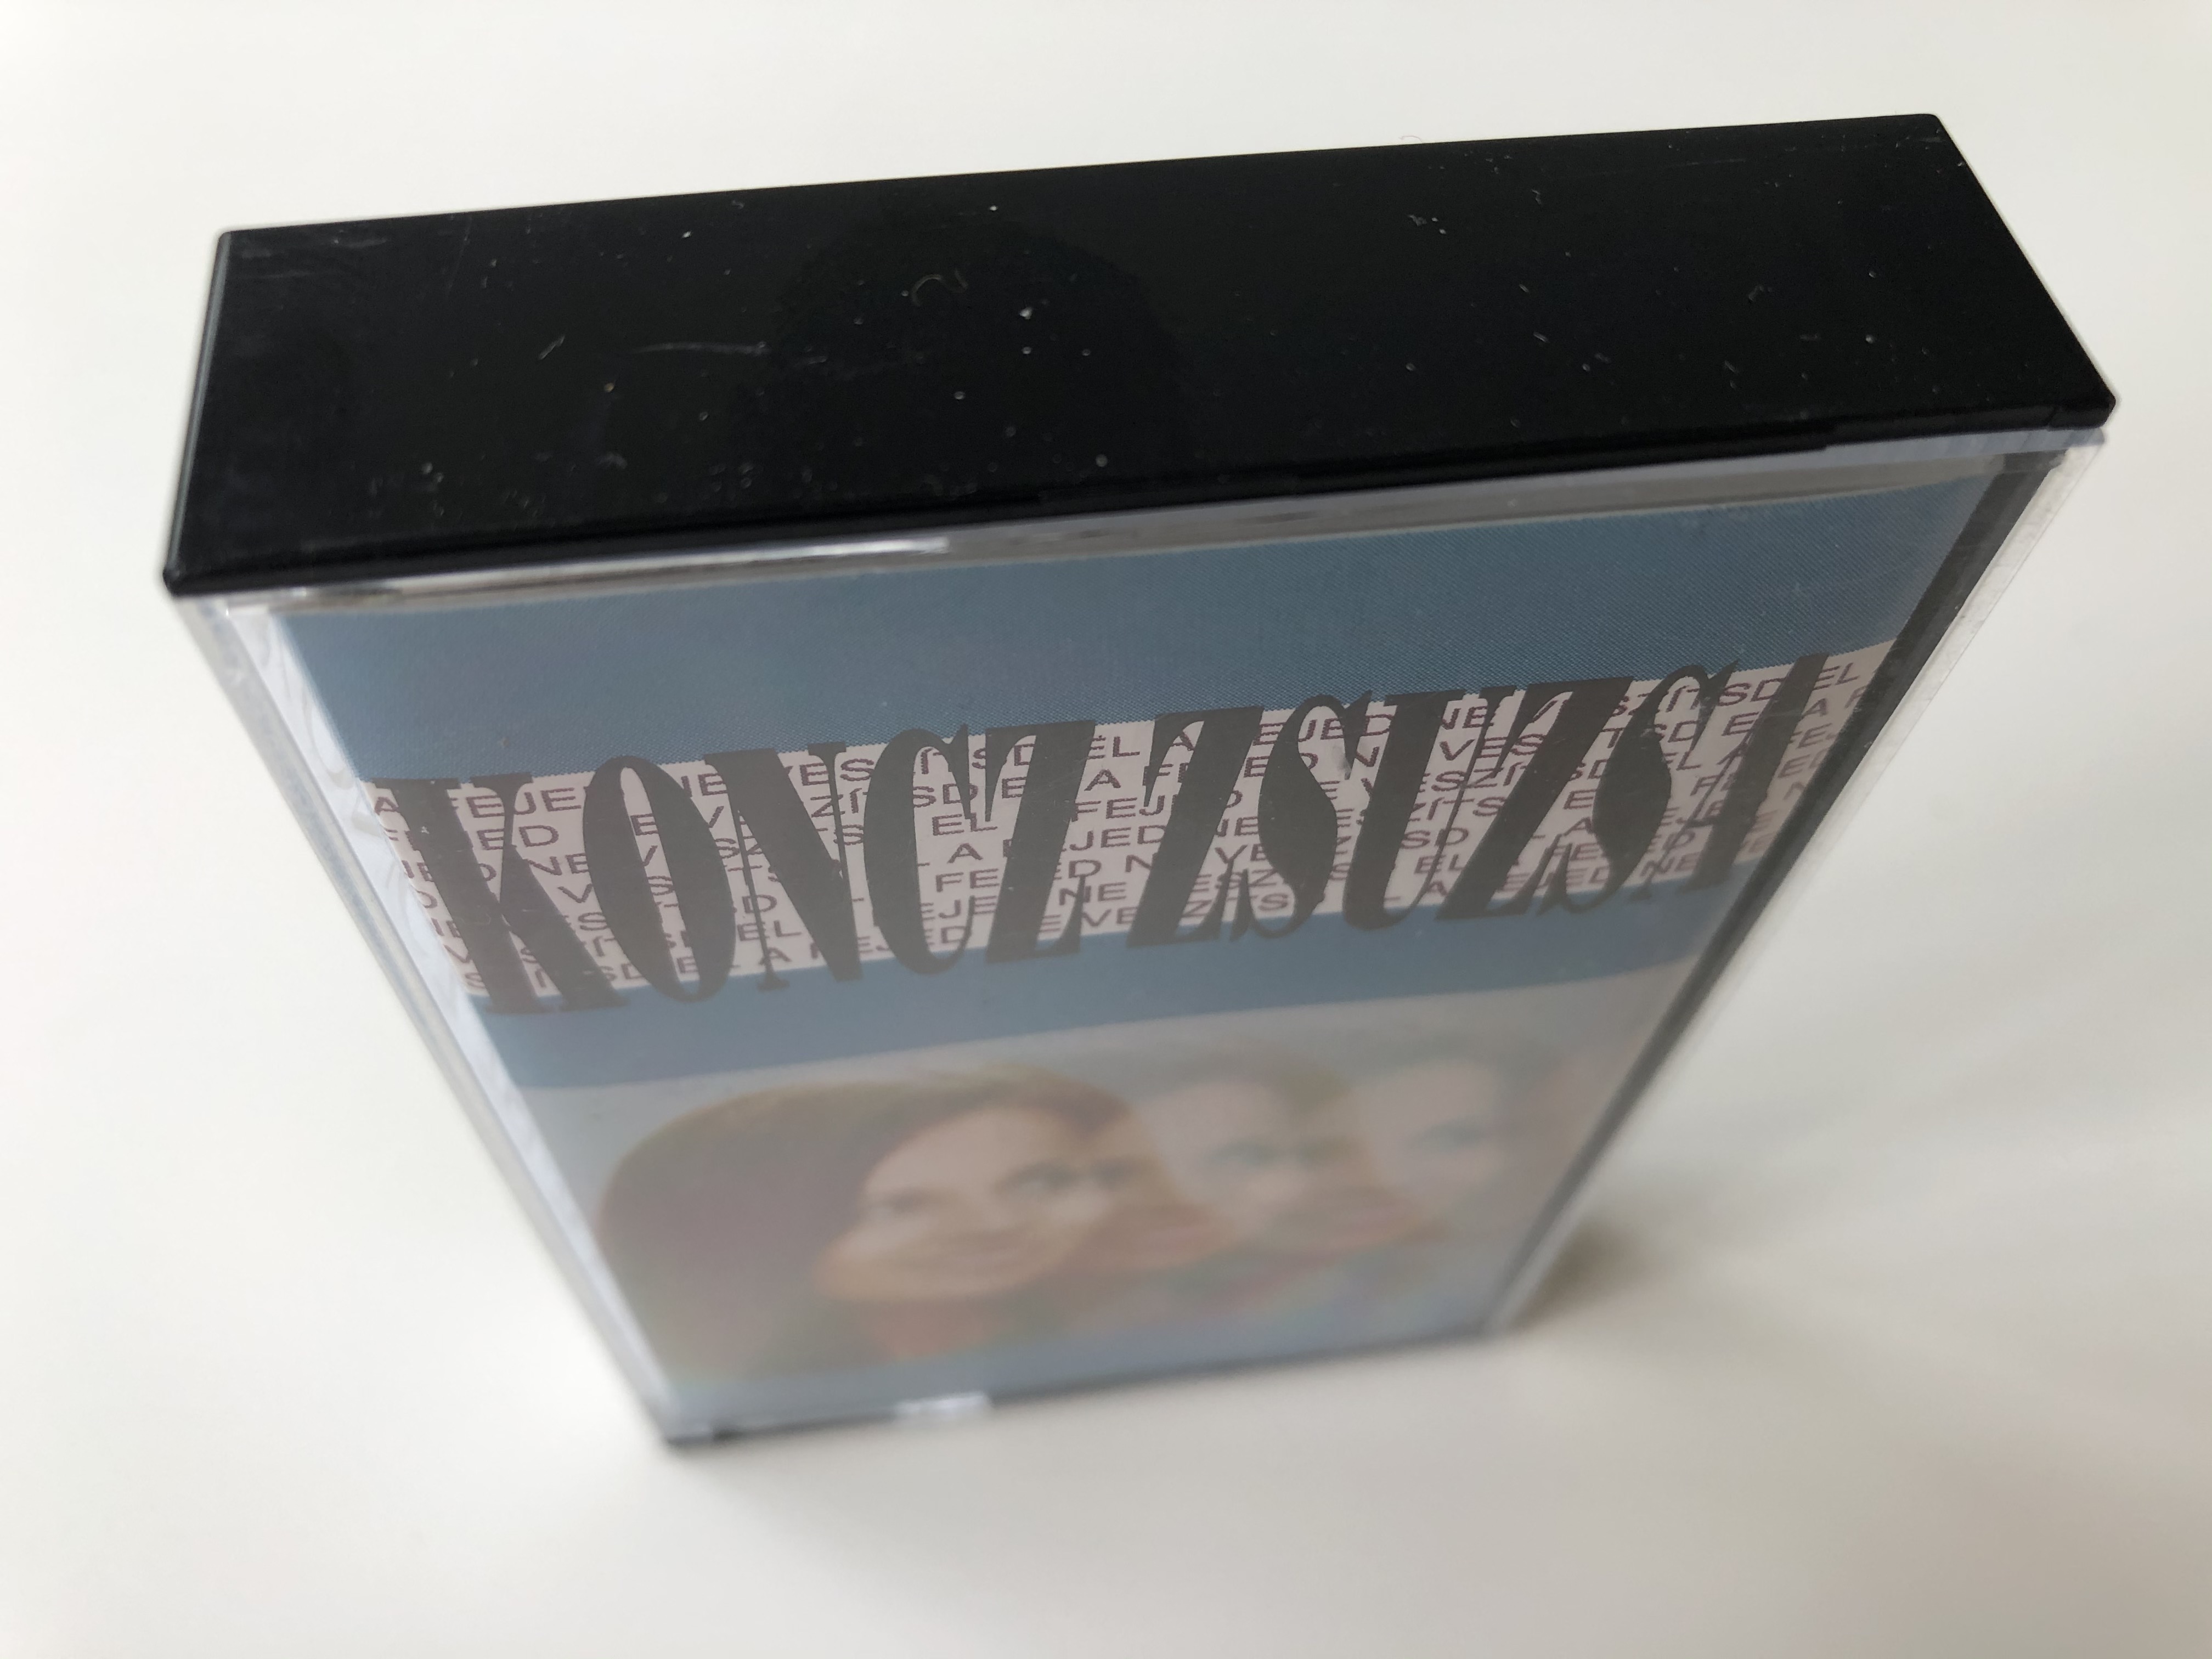 koncz-zsuzsa-ne-vesz-tsd-el-a-fejed-emi-quint-2x-audio-cassette-1993-qui-406042-7-.jpg